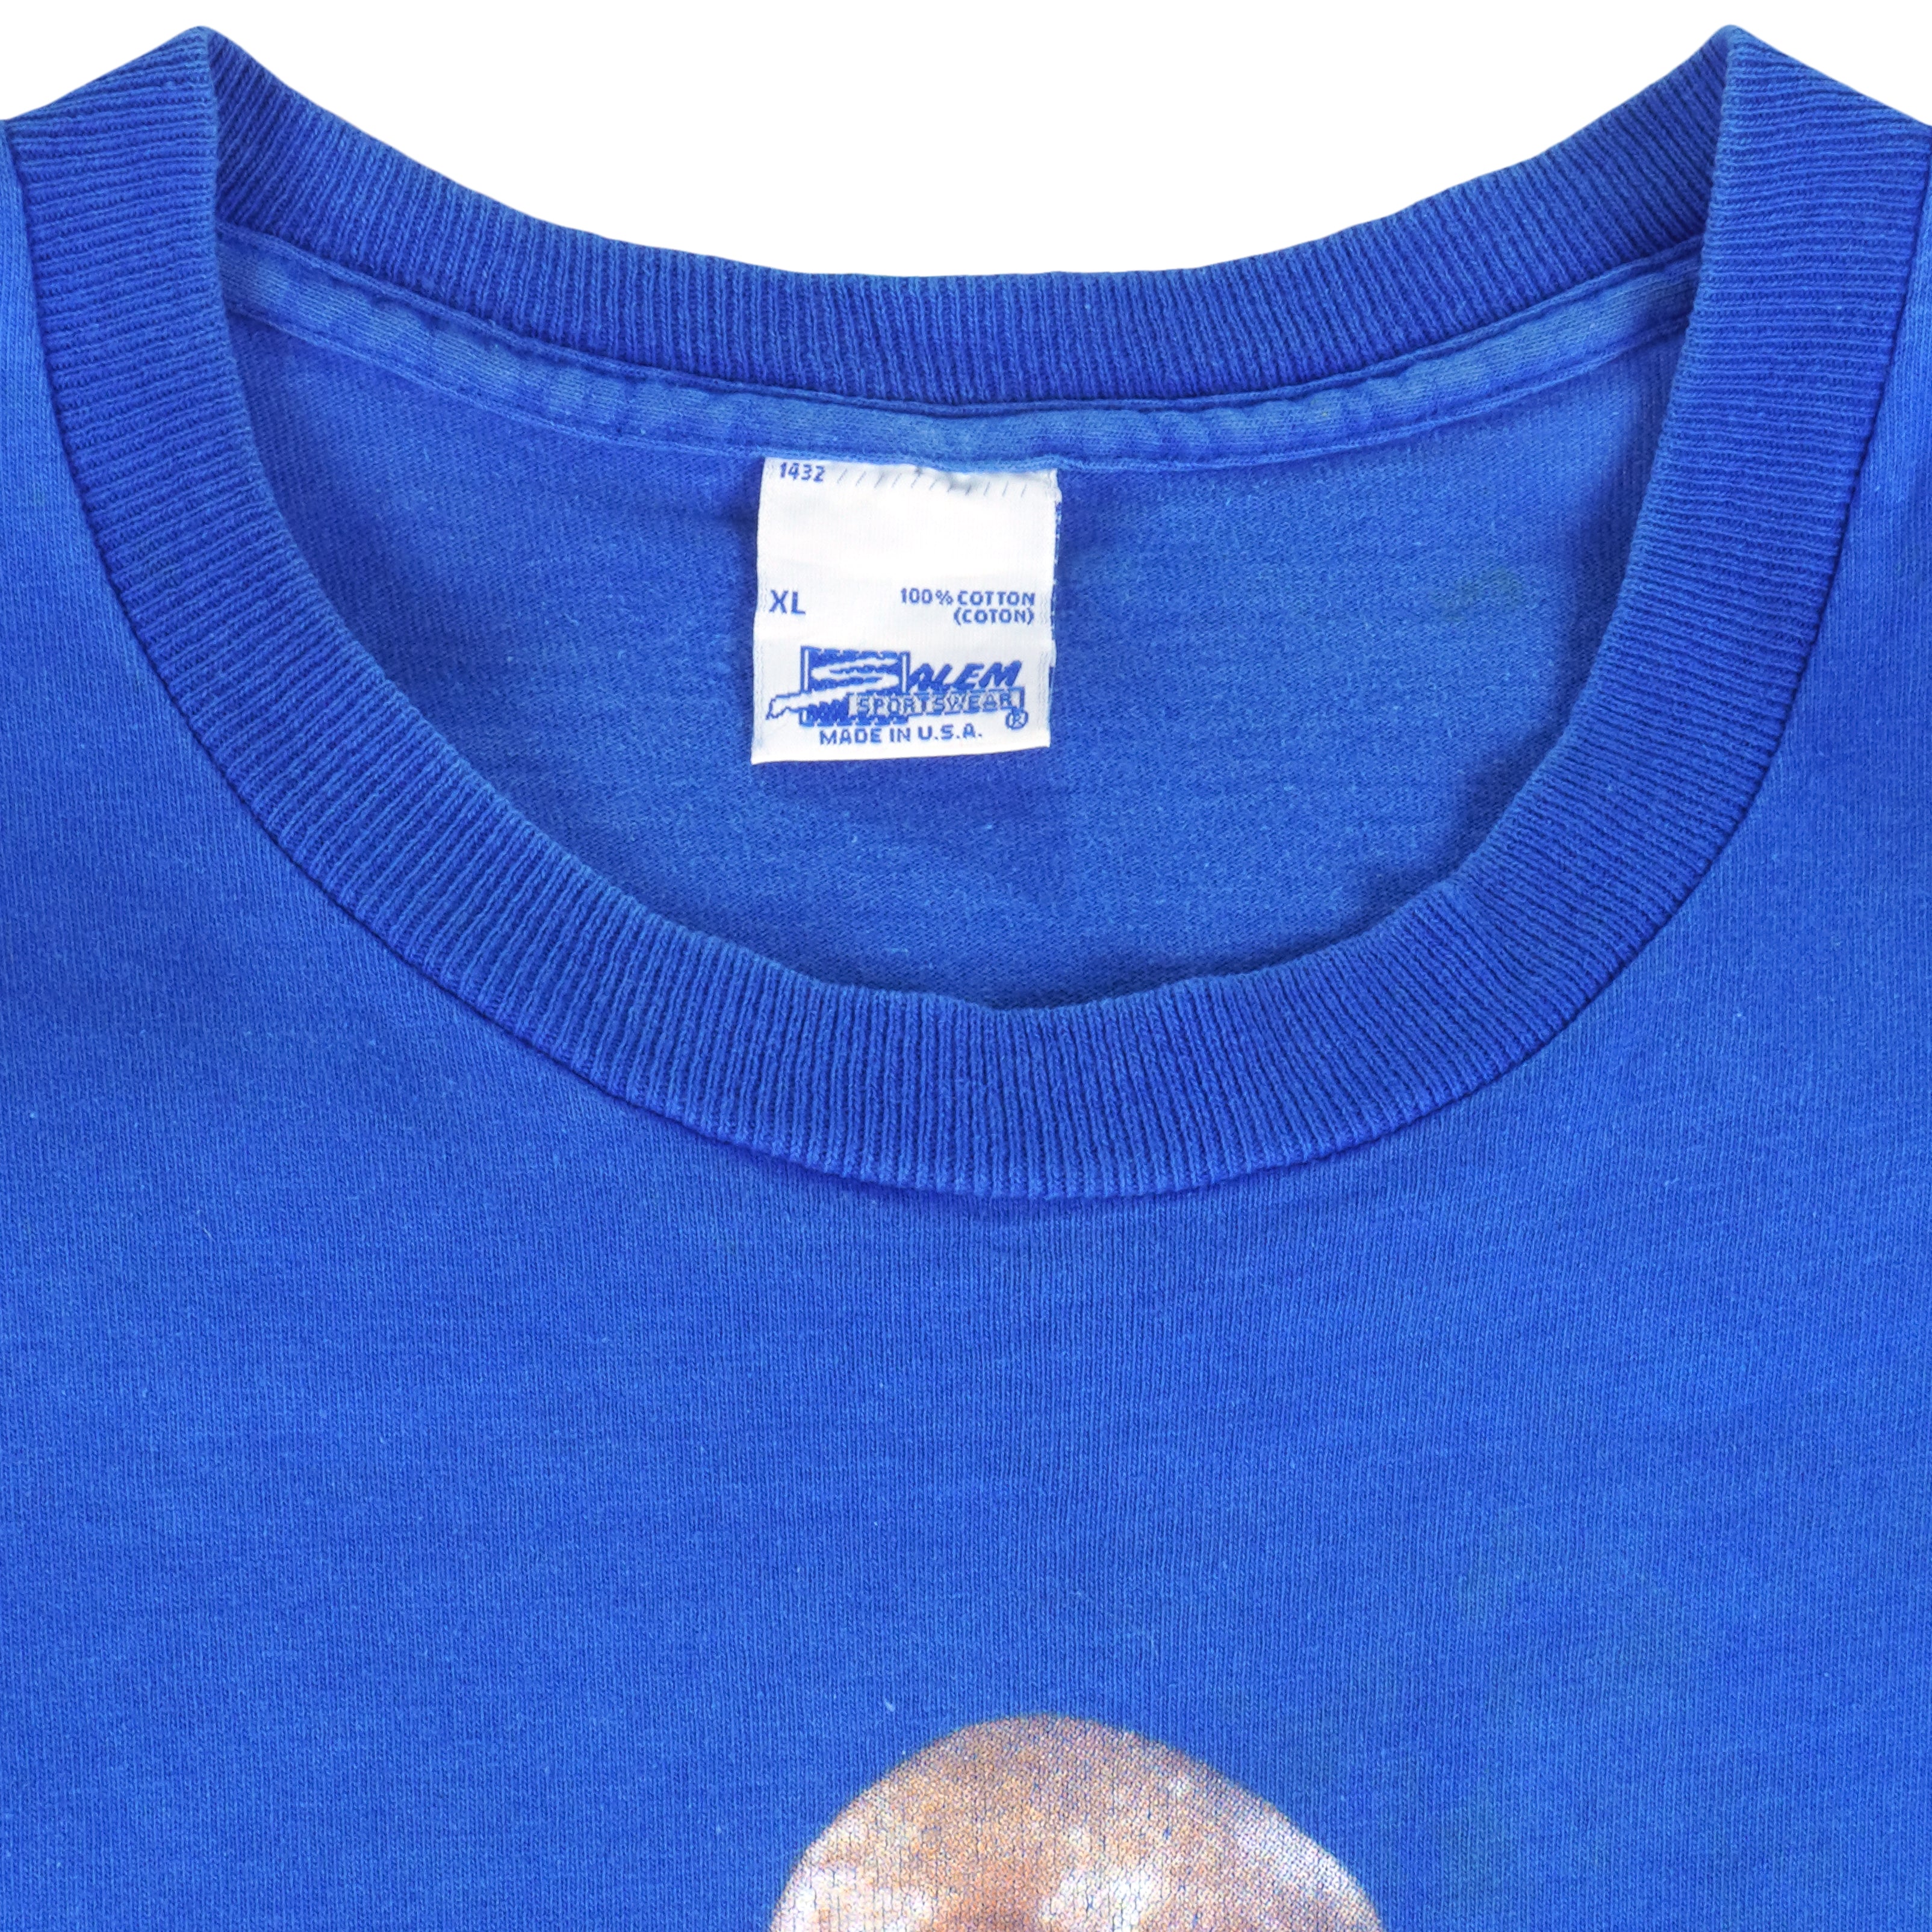 XL) Vintage Salem Detroit Pistons 1990 NBA Championship T Shirt